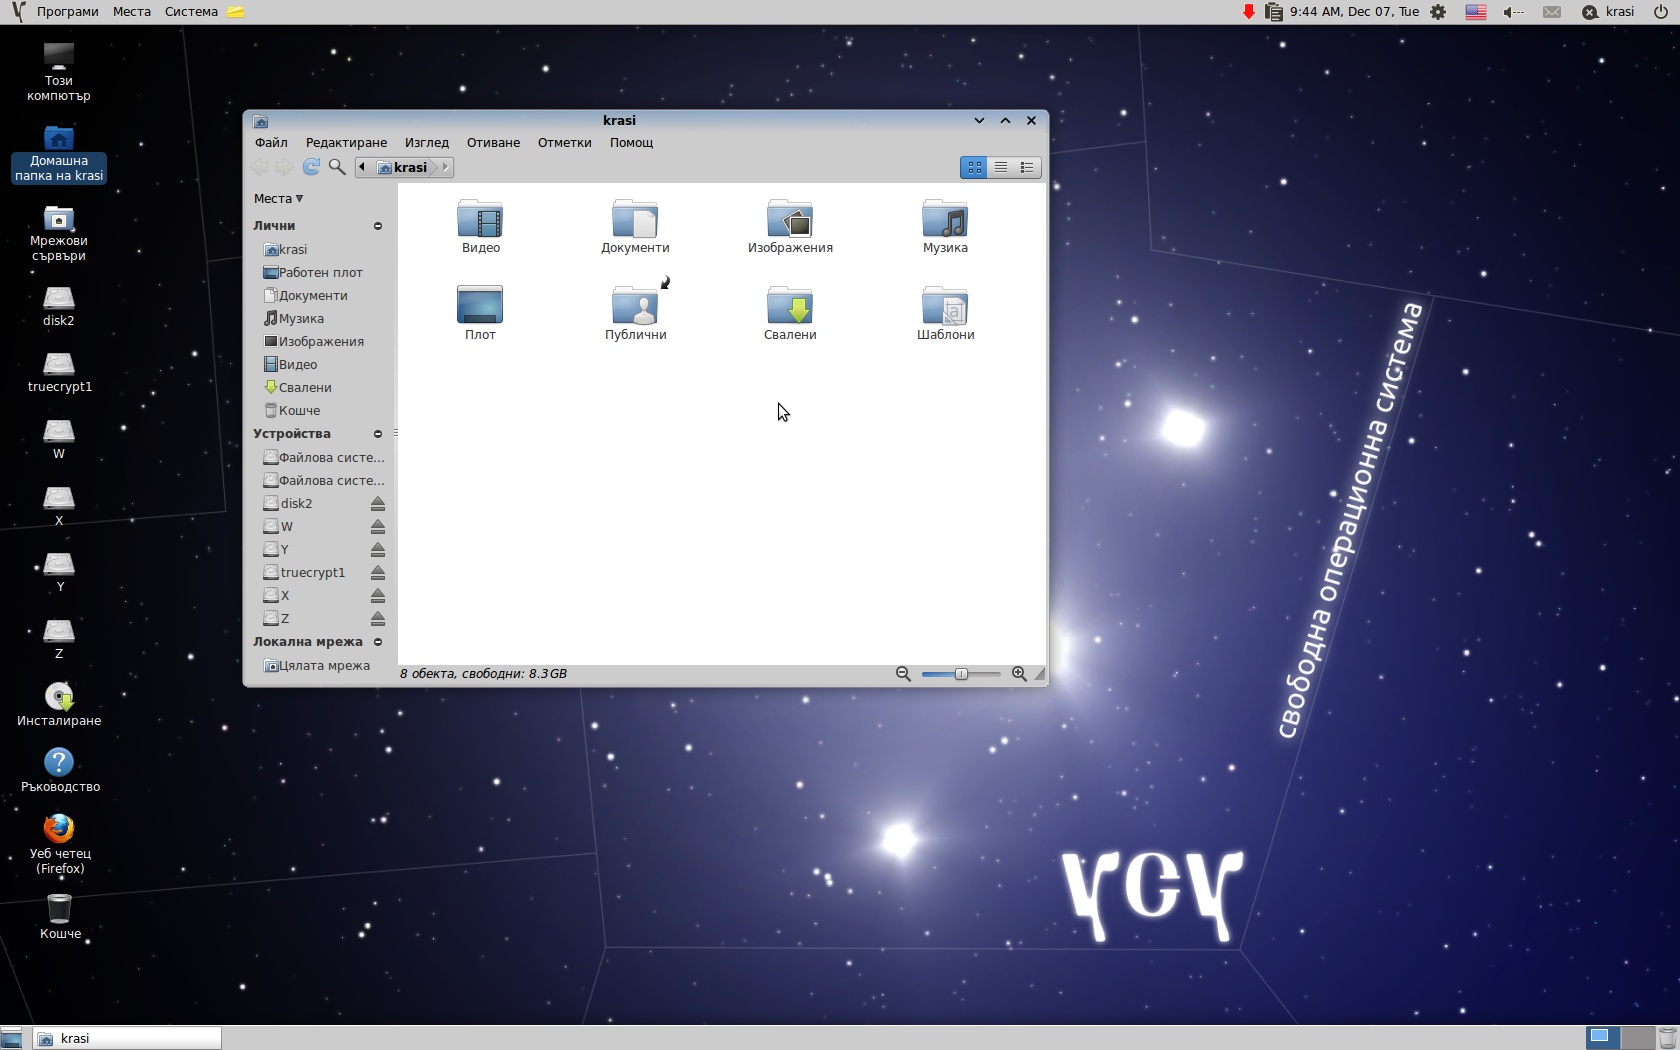 USU Linux Desktop